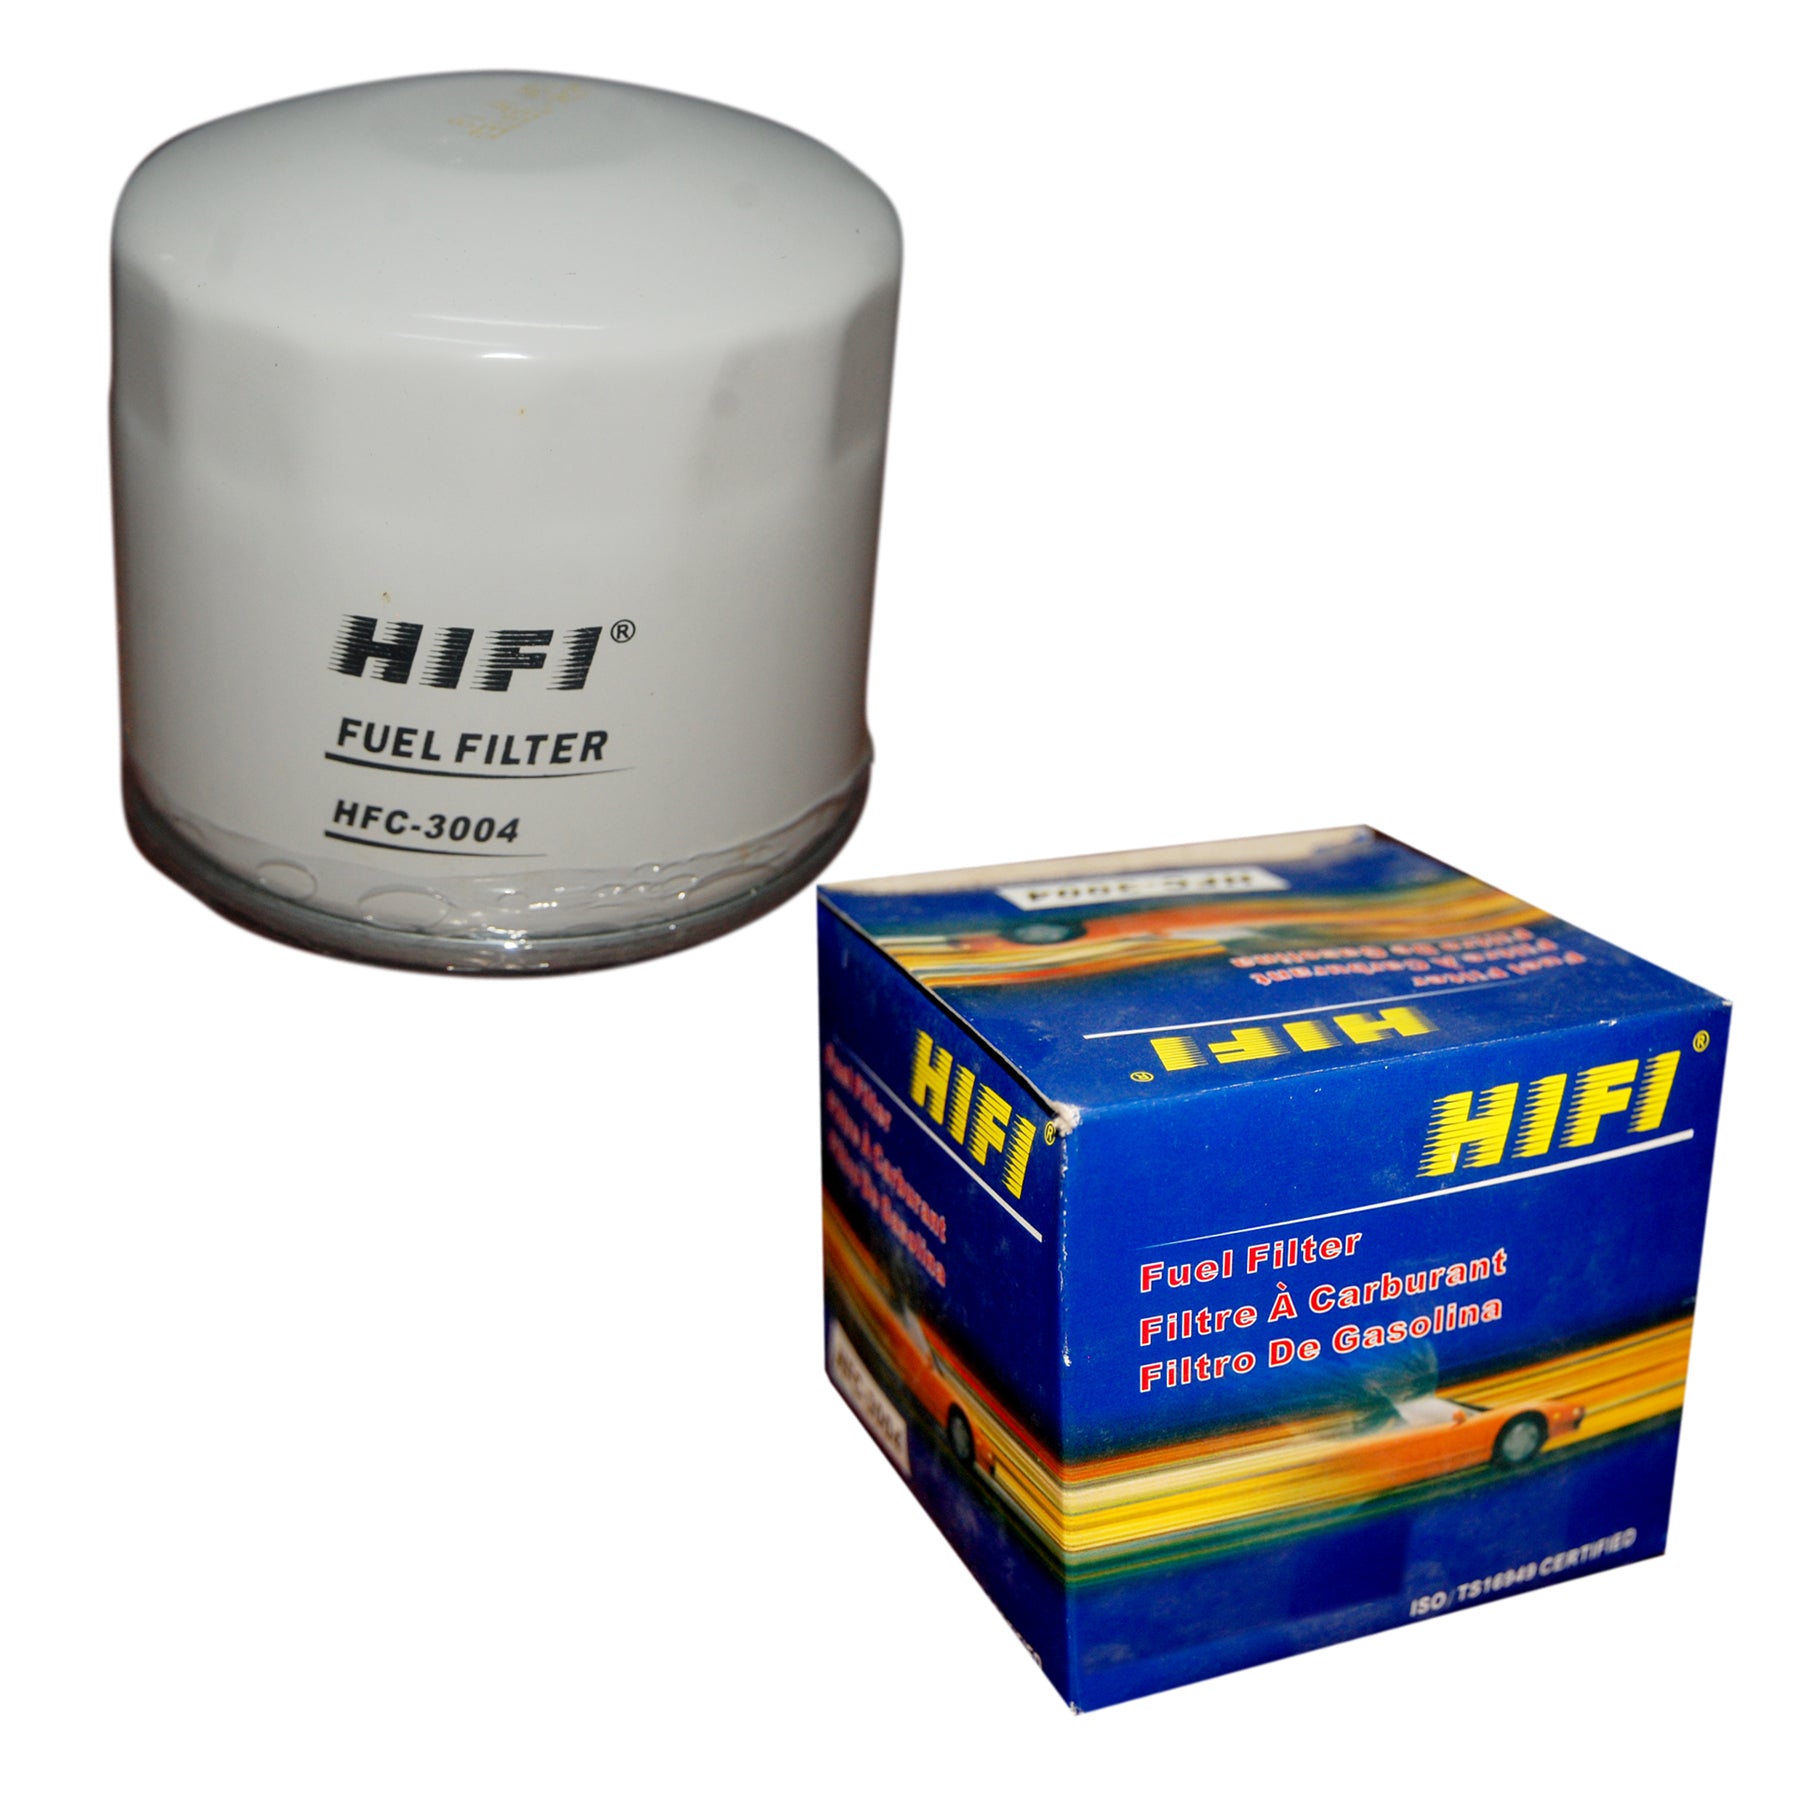 Fuel Filter, HIFI, ME006066, HFC-3004 (001186) - Win Store